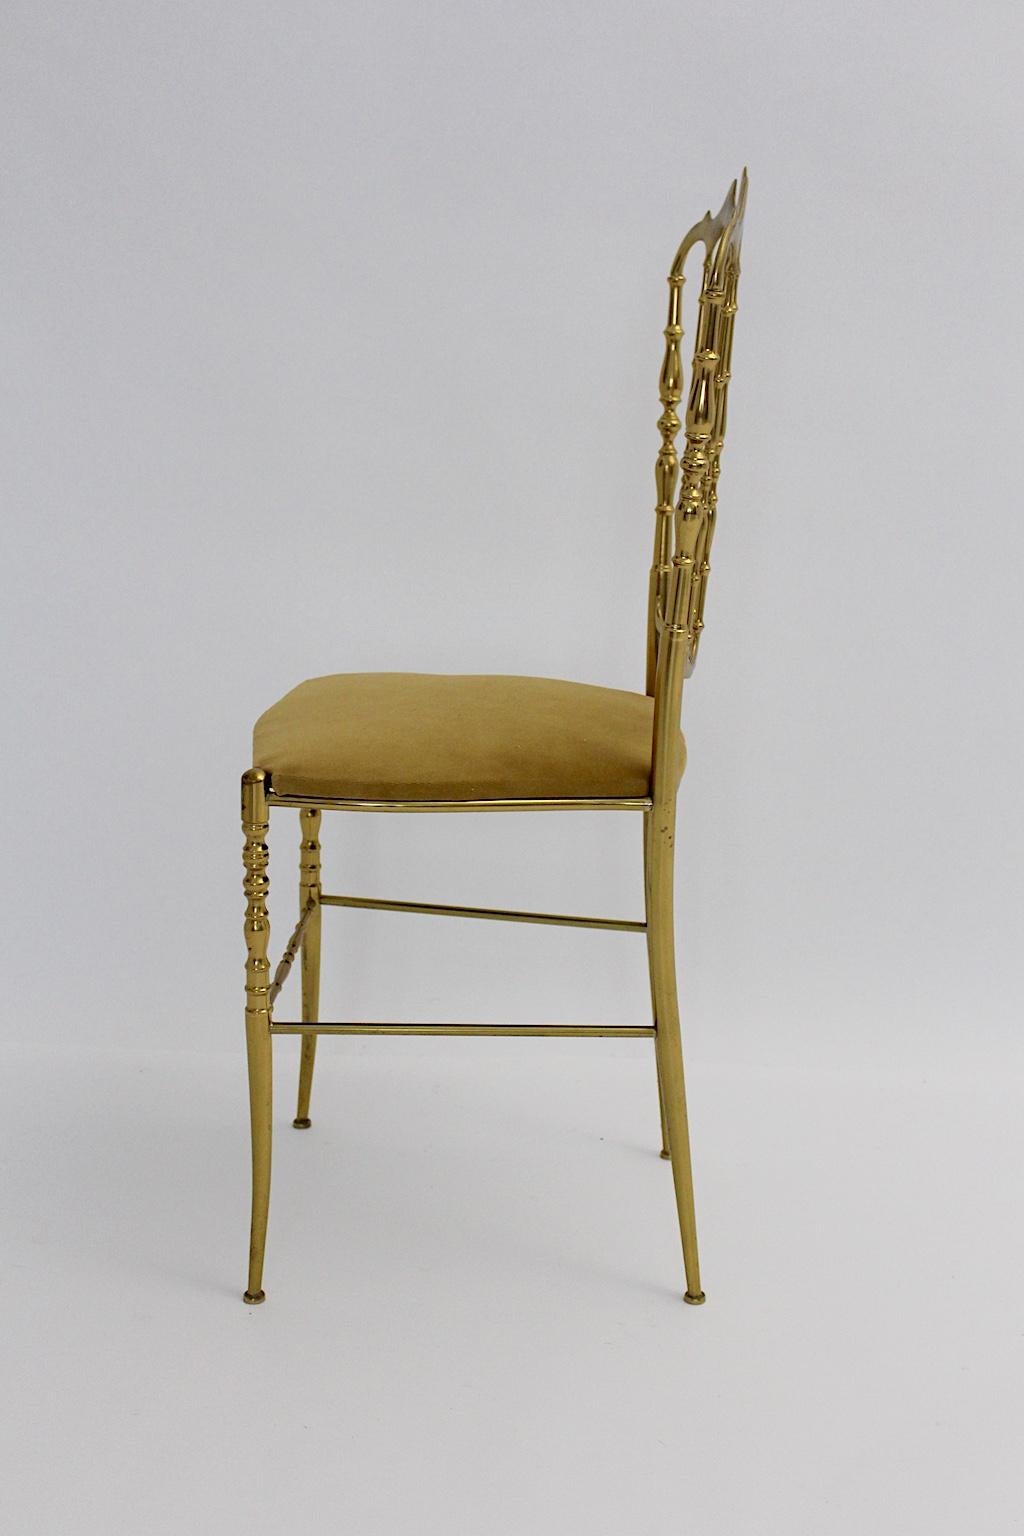 vintage chiavari chairs